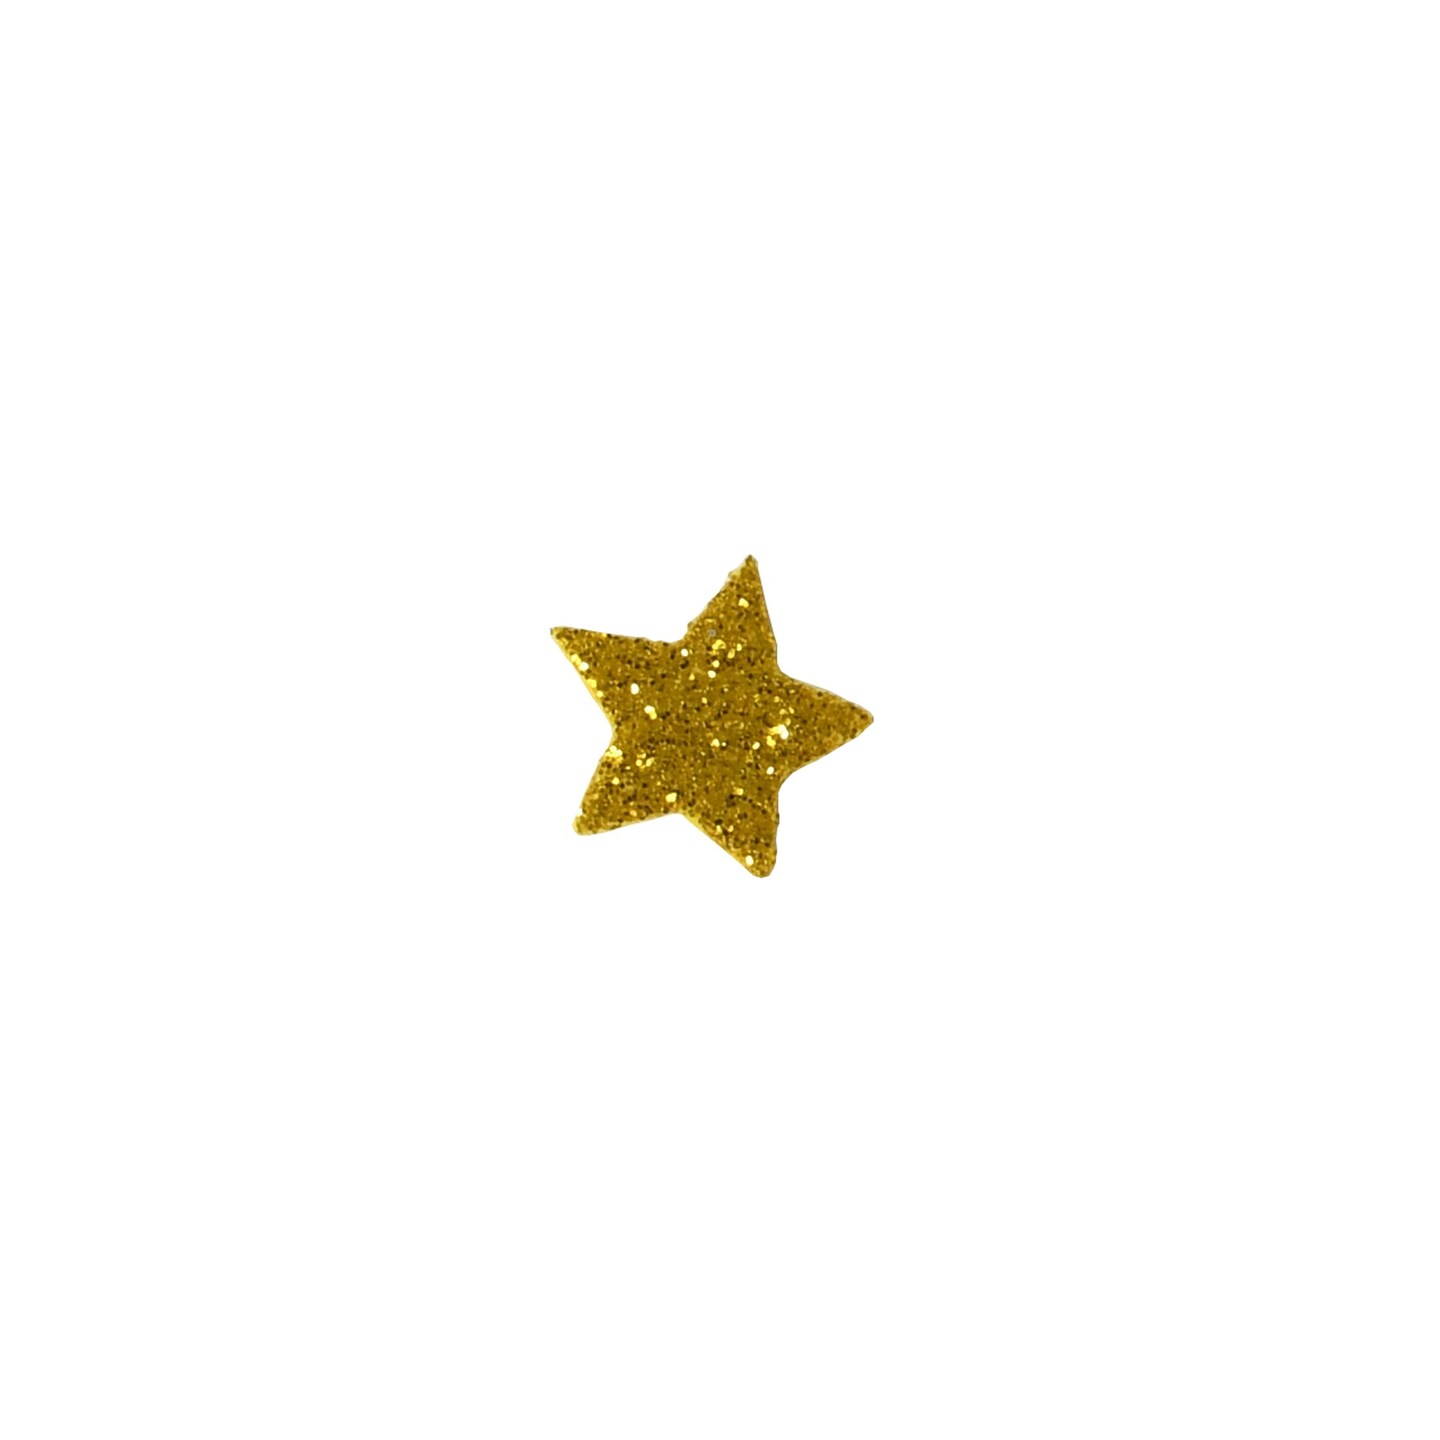 Glitter Foam Stickers - Stars - Silver and Gold